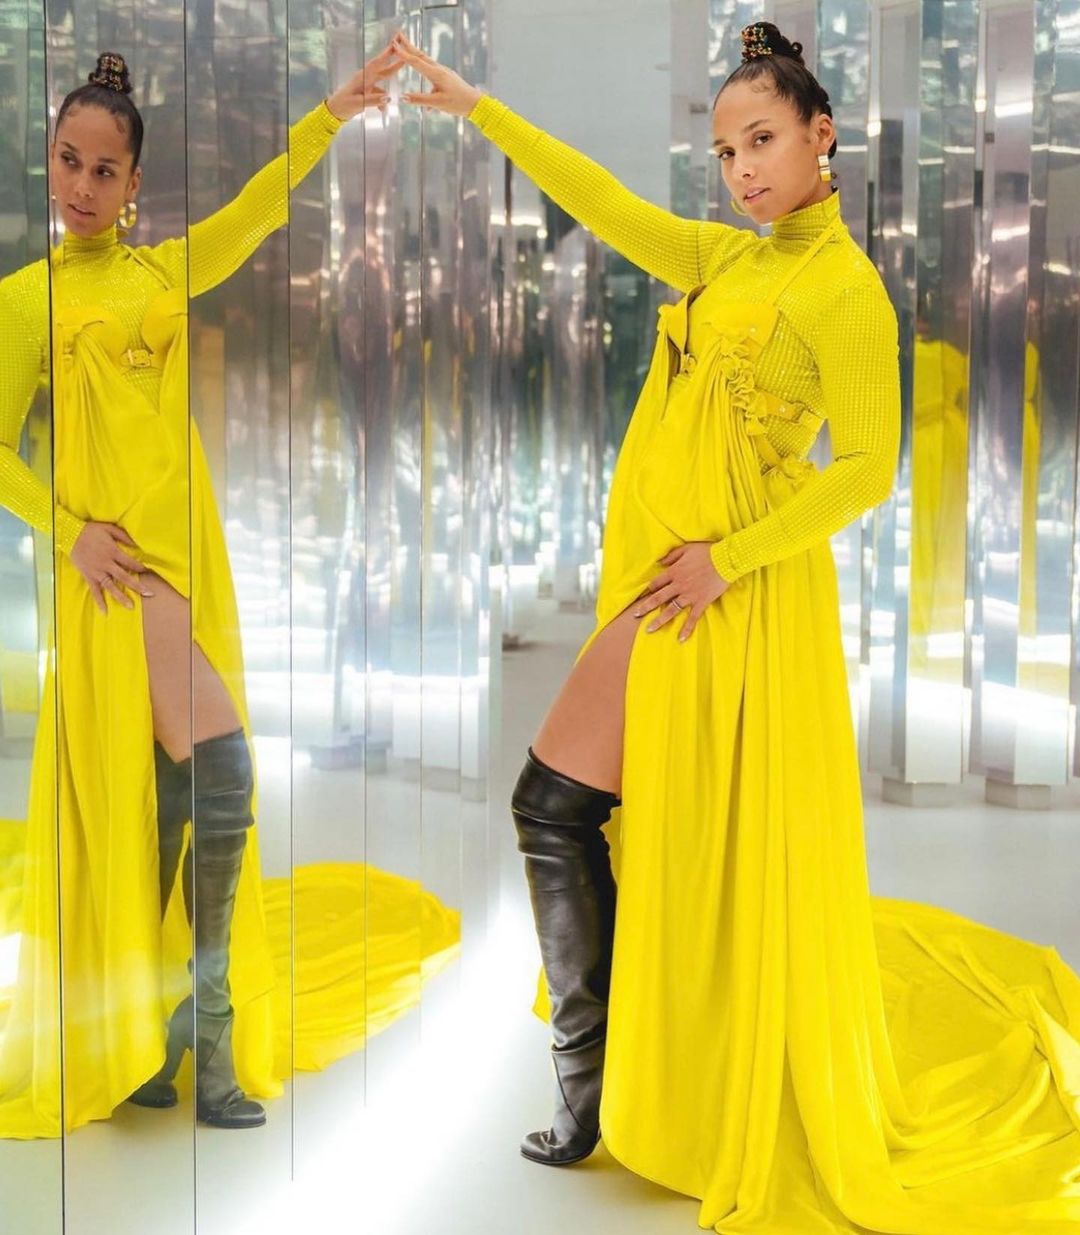 Alicia Keys, Chloe Bailey, Zaya Wade And More — Here Are This Week’s Best Dressed Celebrities